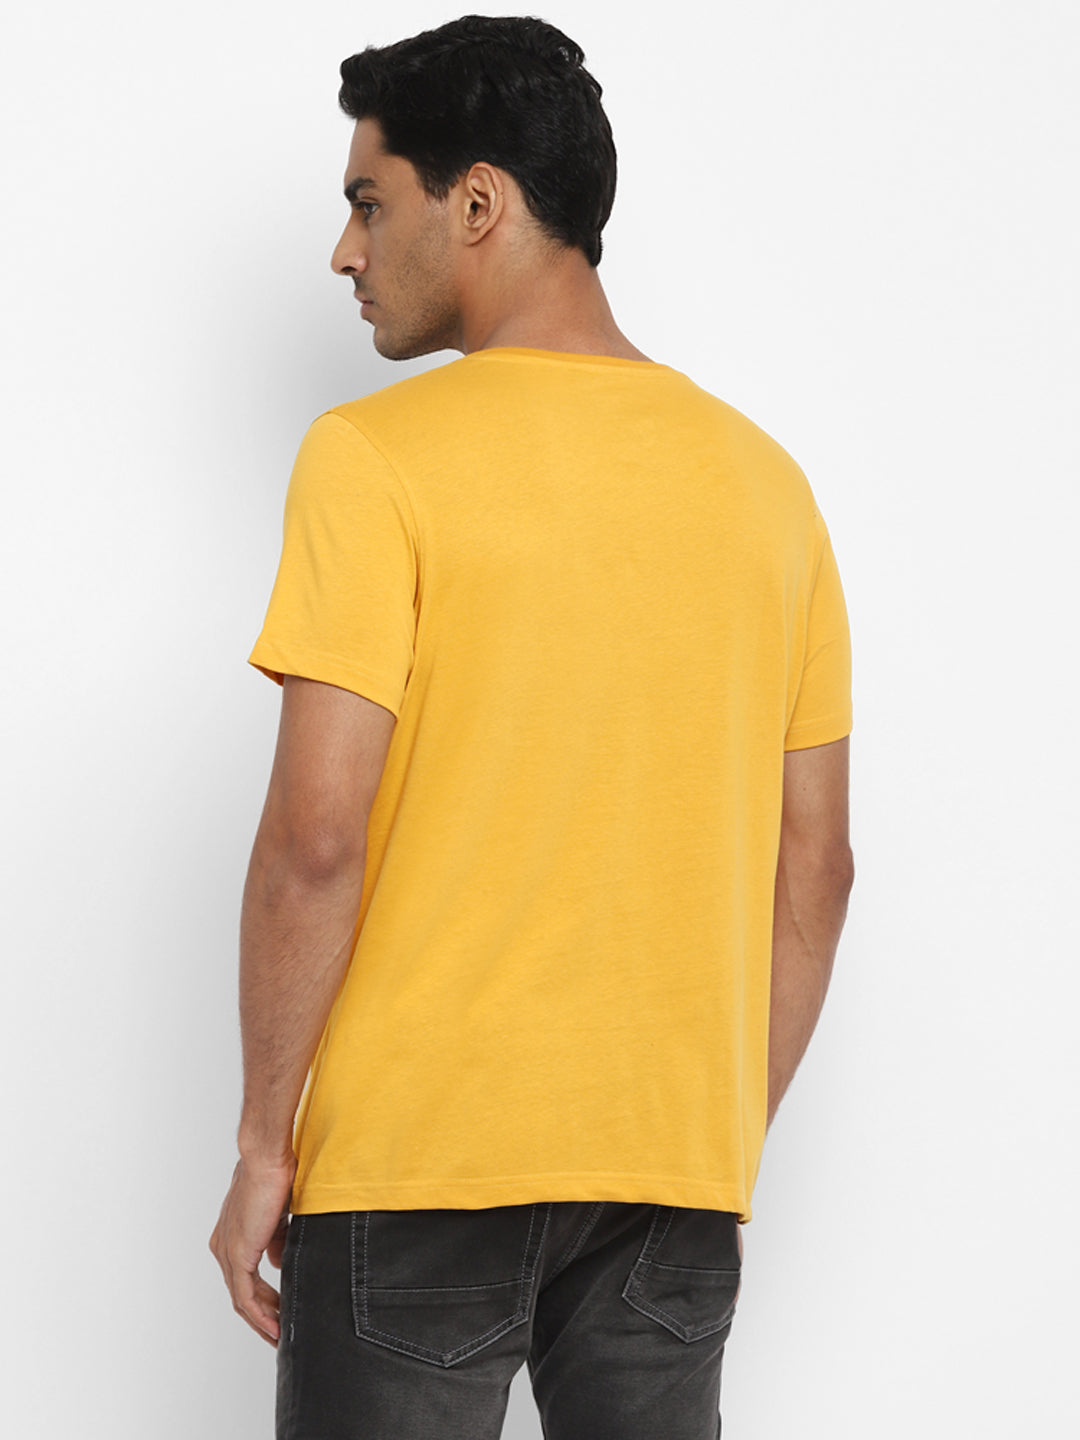 Essentials Yellow Solid V Neck T-Shirt